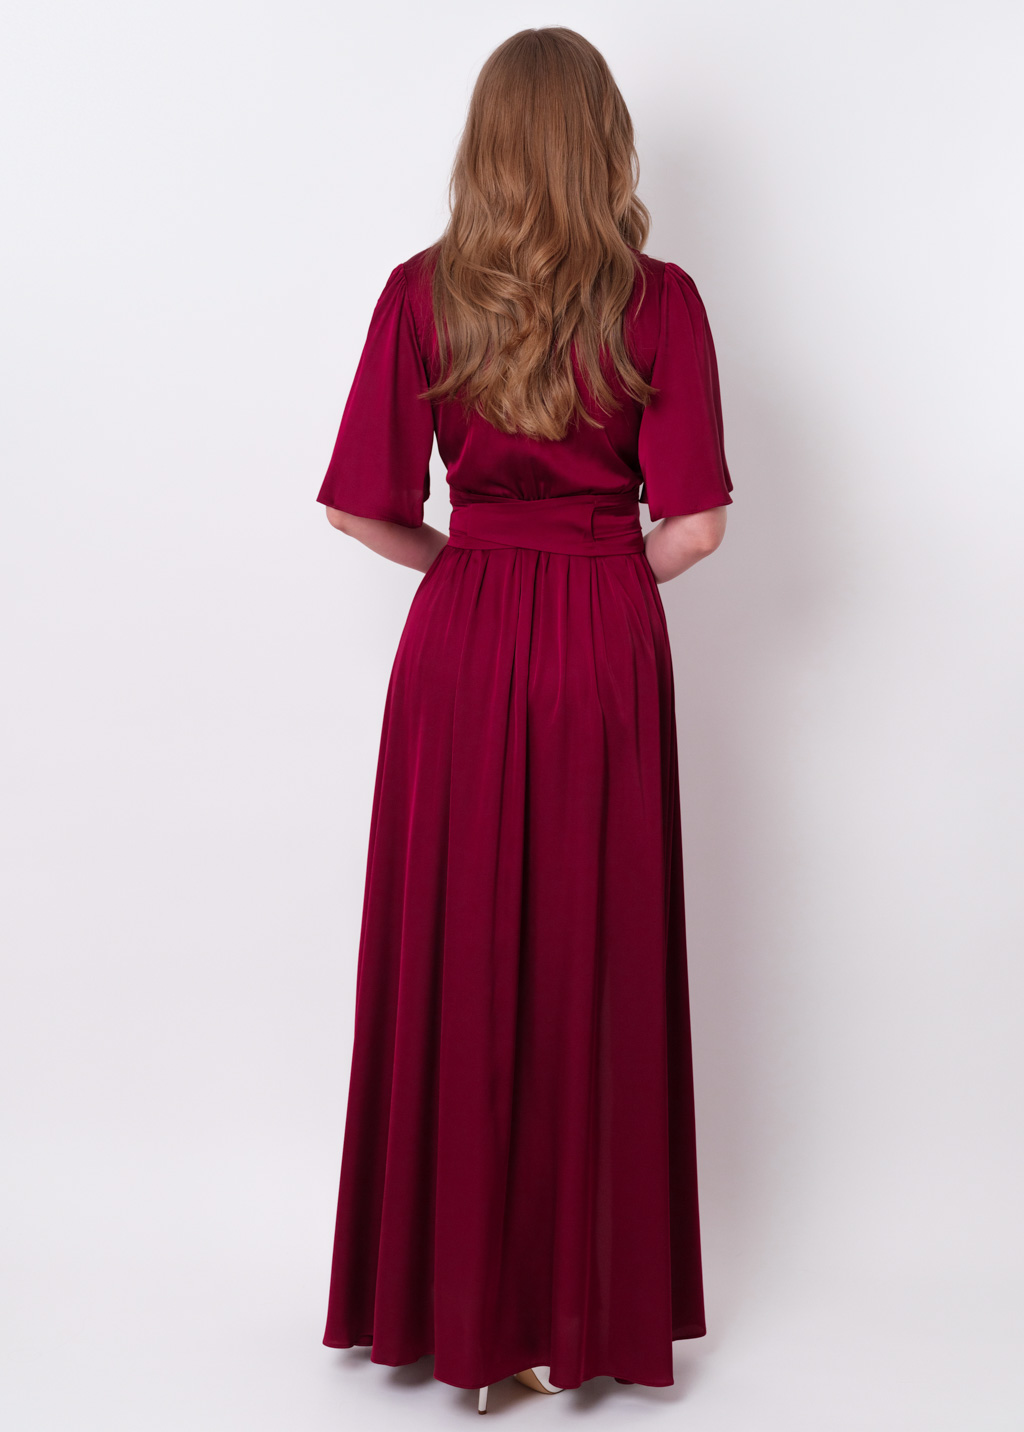 Burgundy silk dress with belt